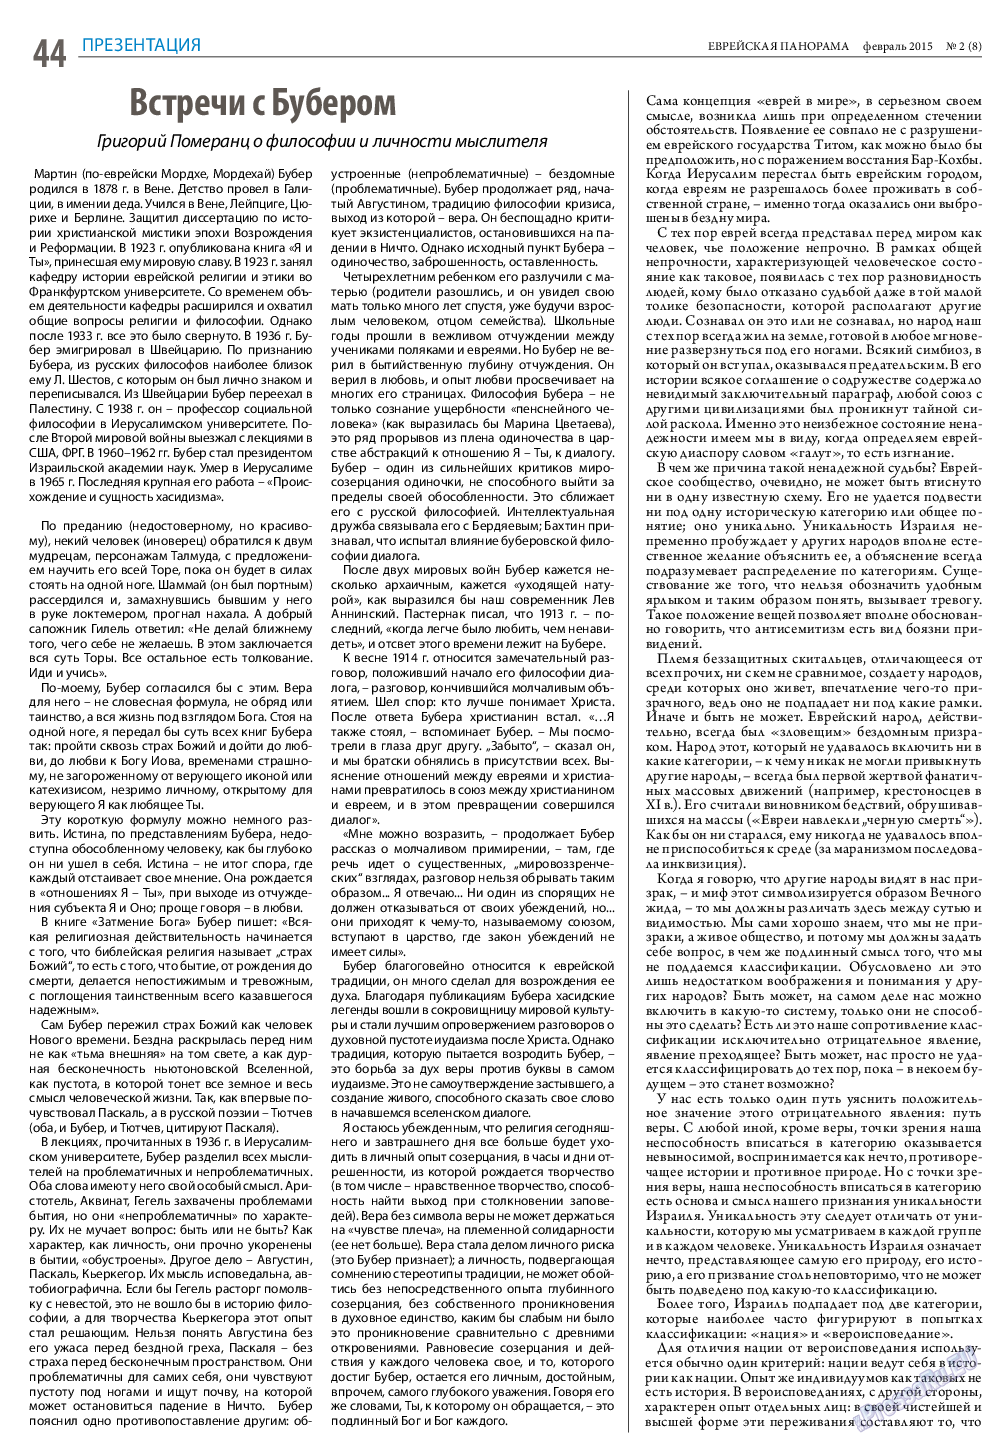 Еврейская панорама, газета. 2015 №2 стр.44